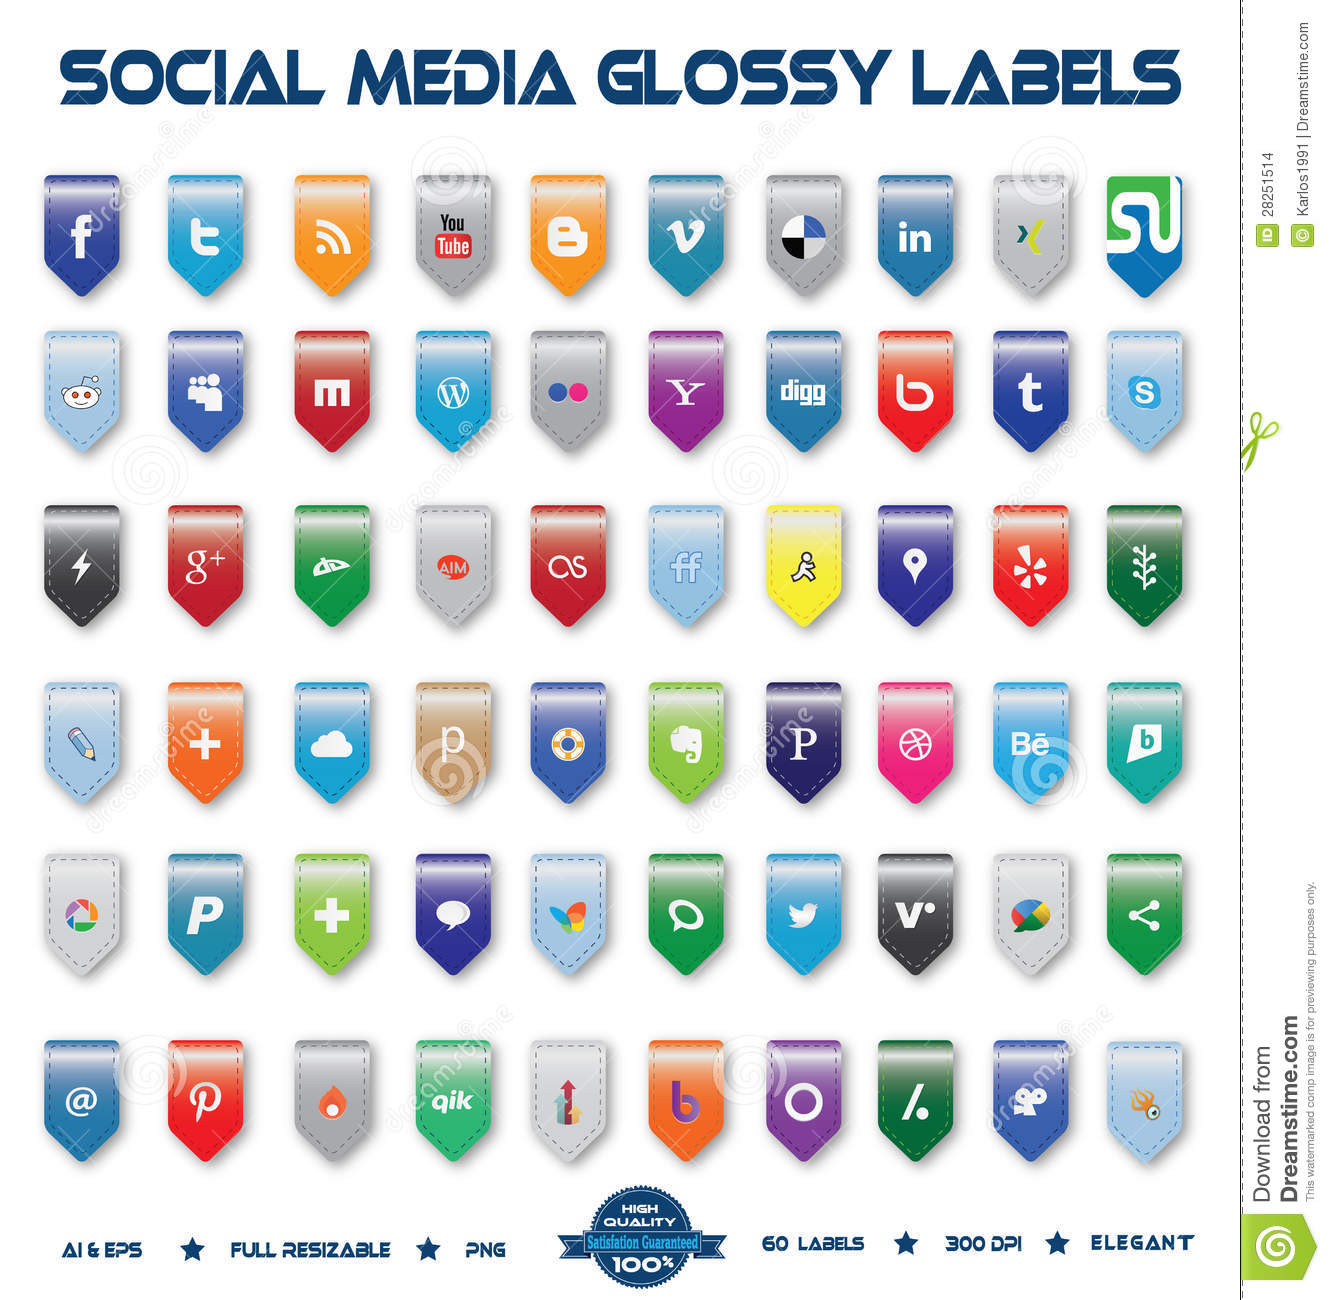 Social Media Glossy Labels Editorial Stock Image   Image  28251514